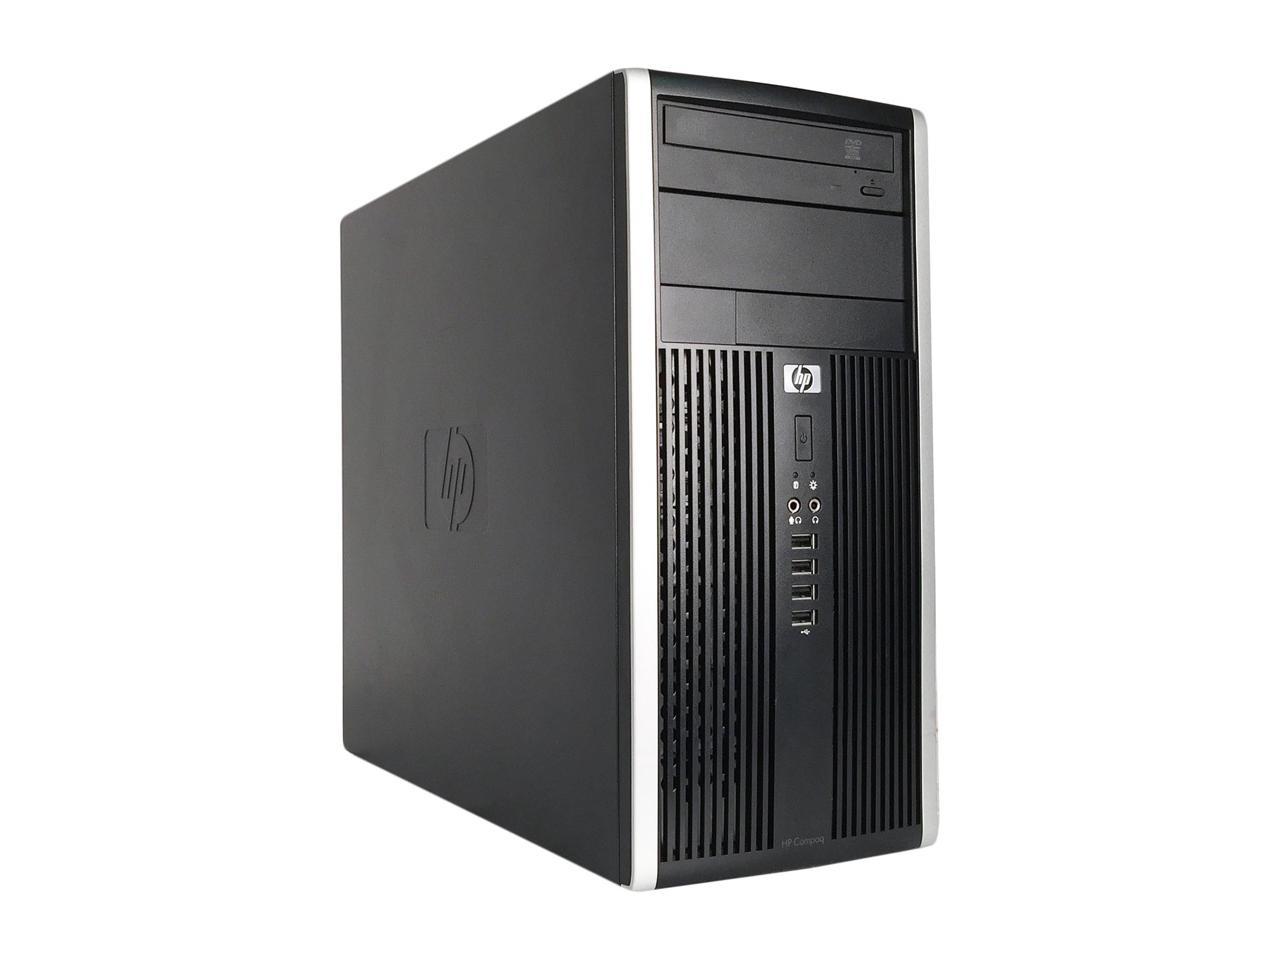 HP Desktop Computer Pro 6300 Intel Core i5 3rd Gen 3470 (3.20 GHz) 4 GB DDR3 1 TB HDD Intel HD Graphics 2500 Windows 10 Pro Multi-Language, English / Spanish